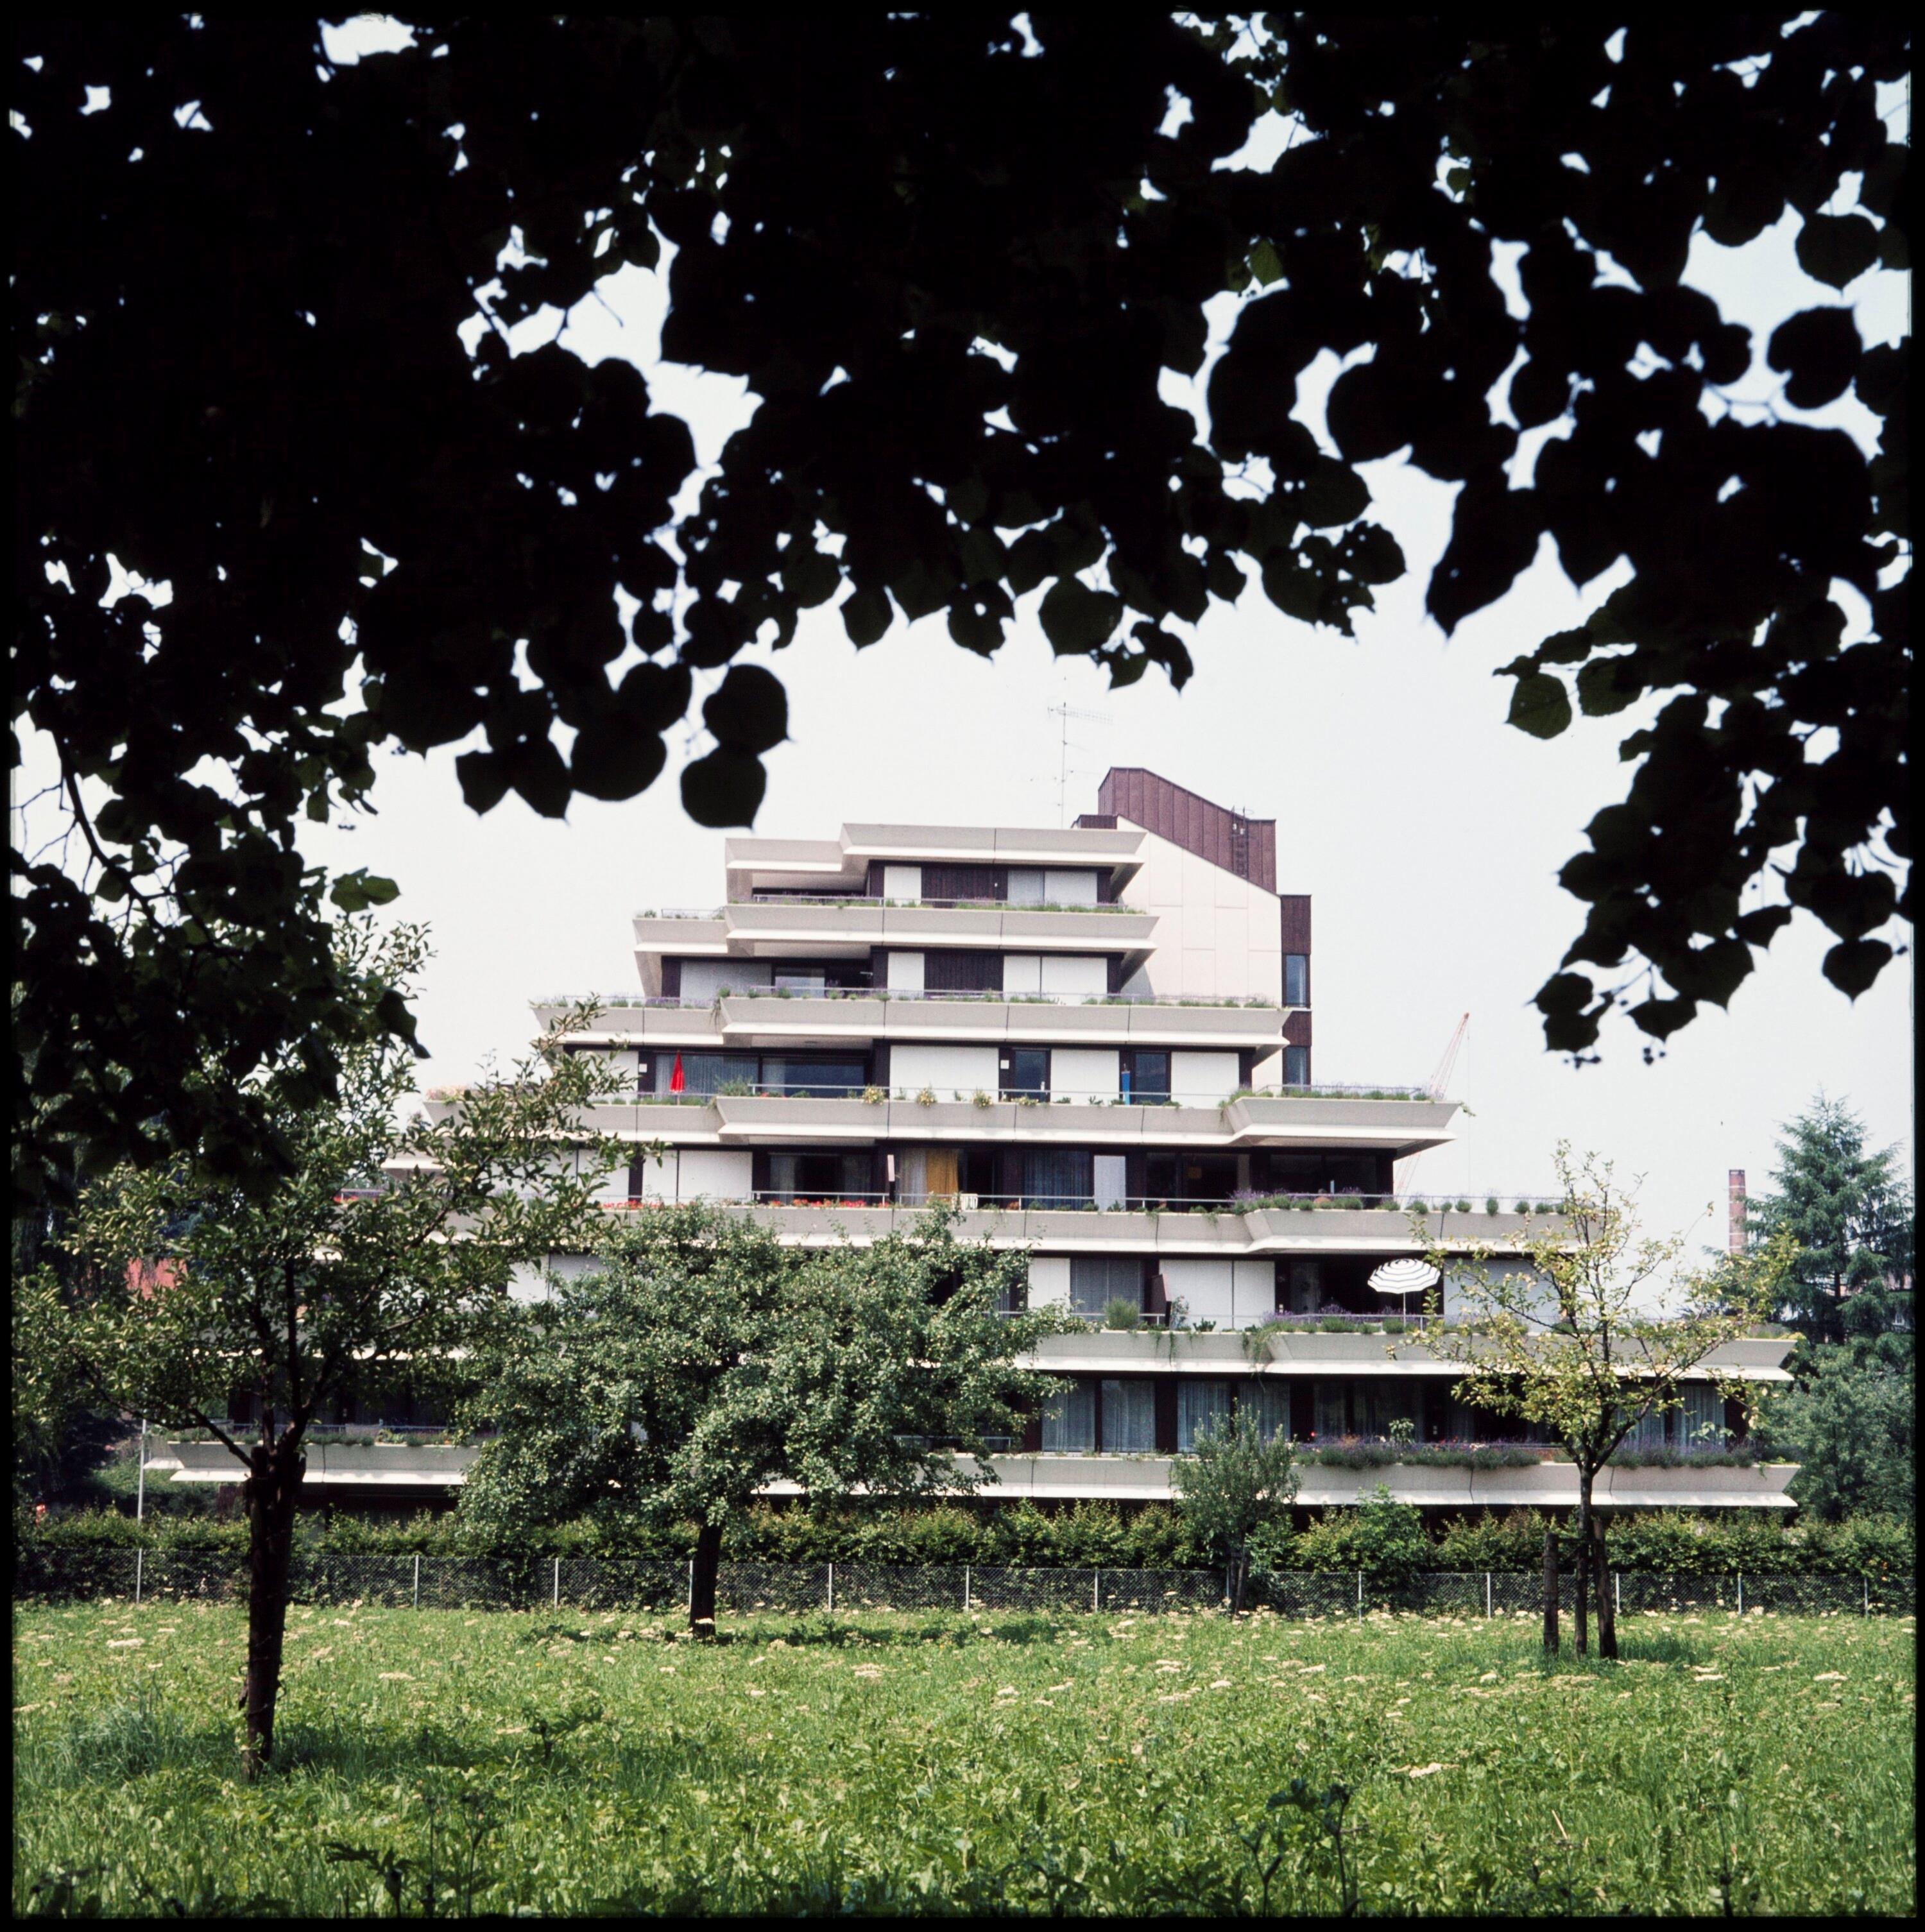 Hügelhaus in Dornbirn></div>


    <hr>
    <div class=